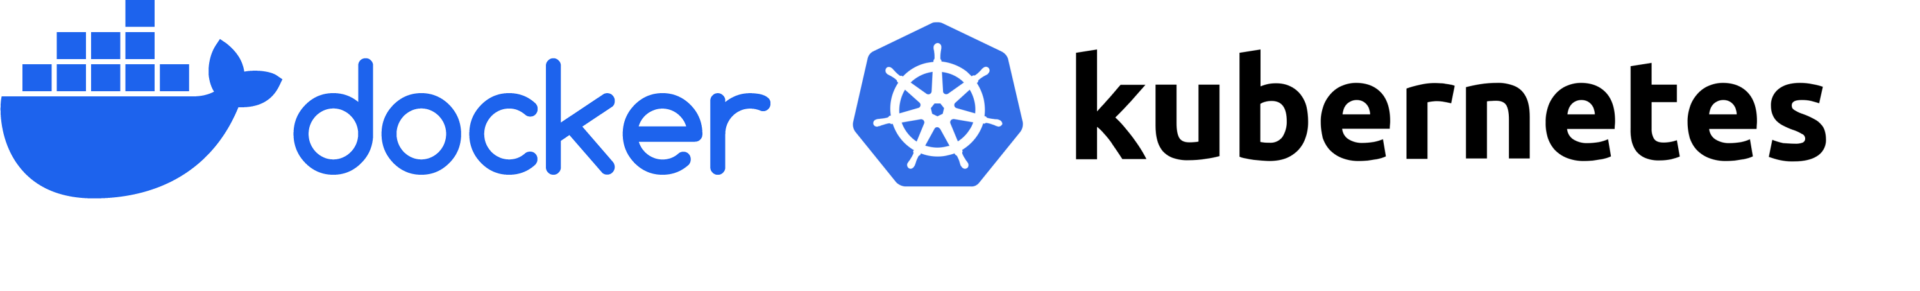 Docker + Kubernetes-logo's